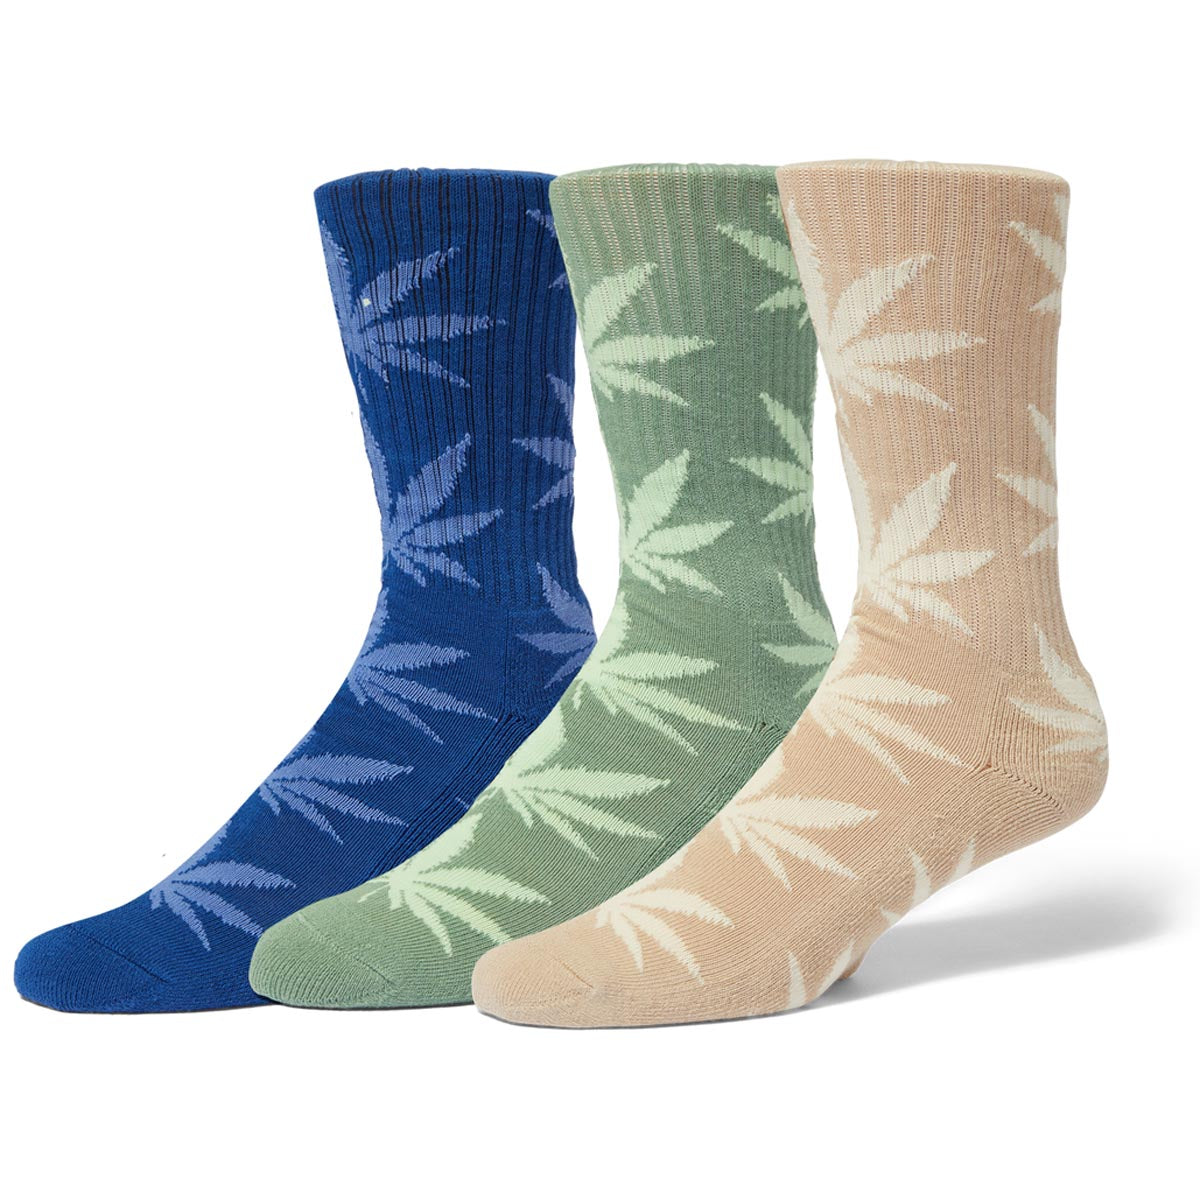 HUF Set 3 Pack of Socks - Mint/Blue/Wheat image 1